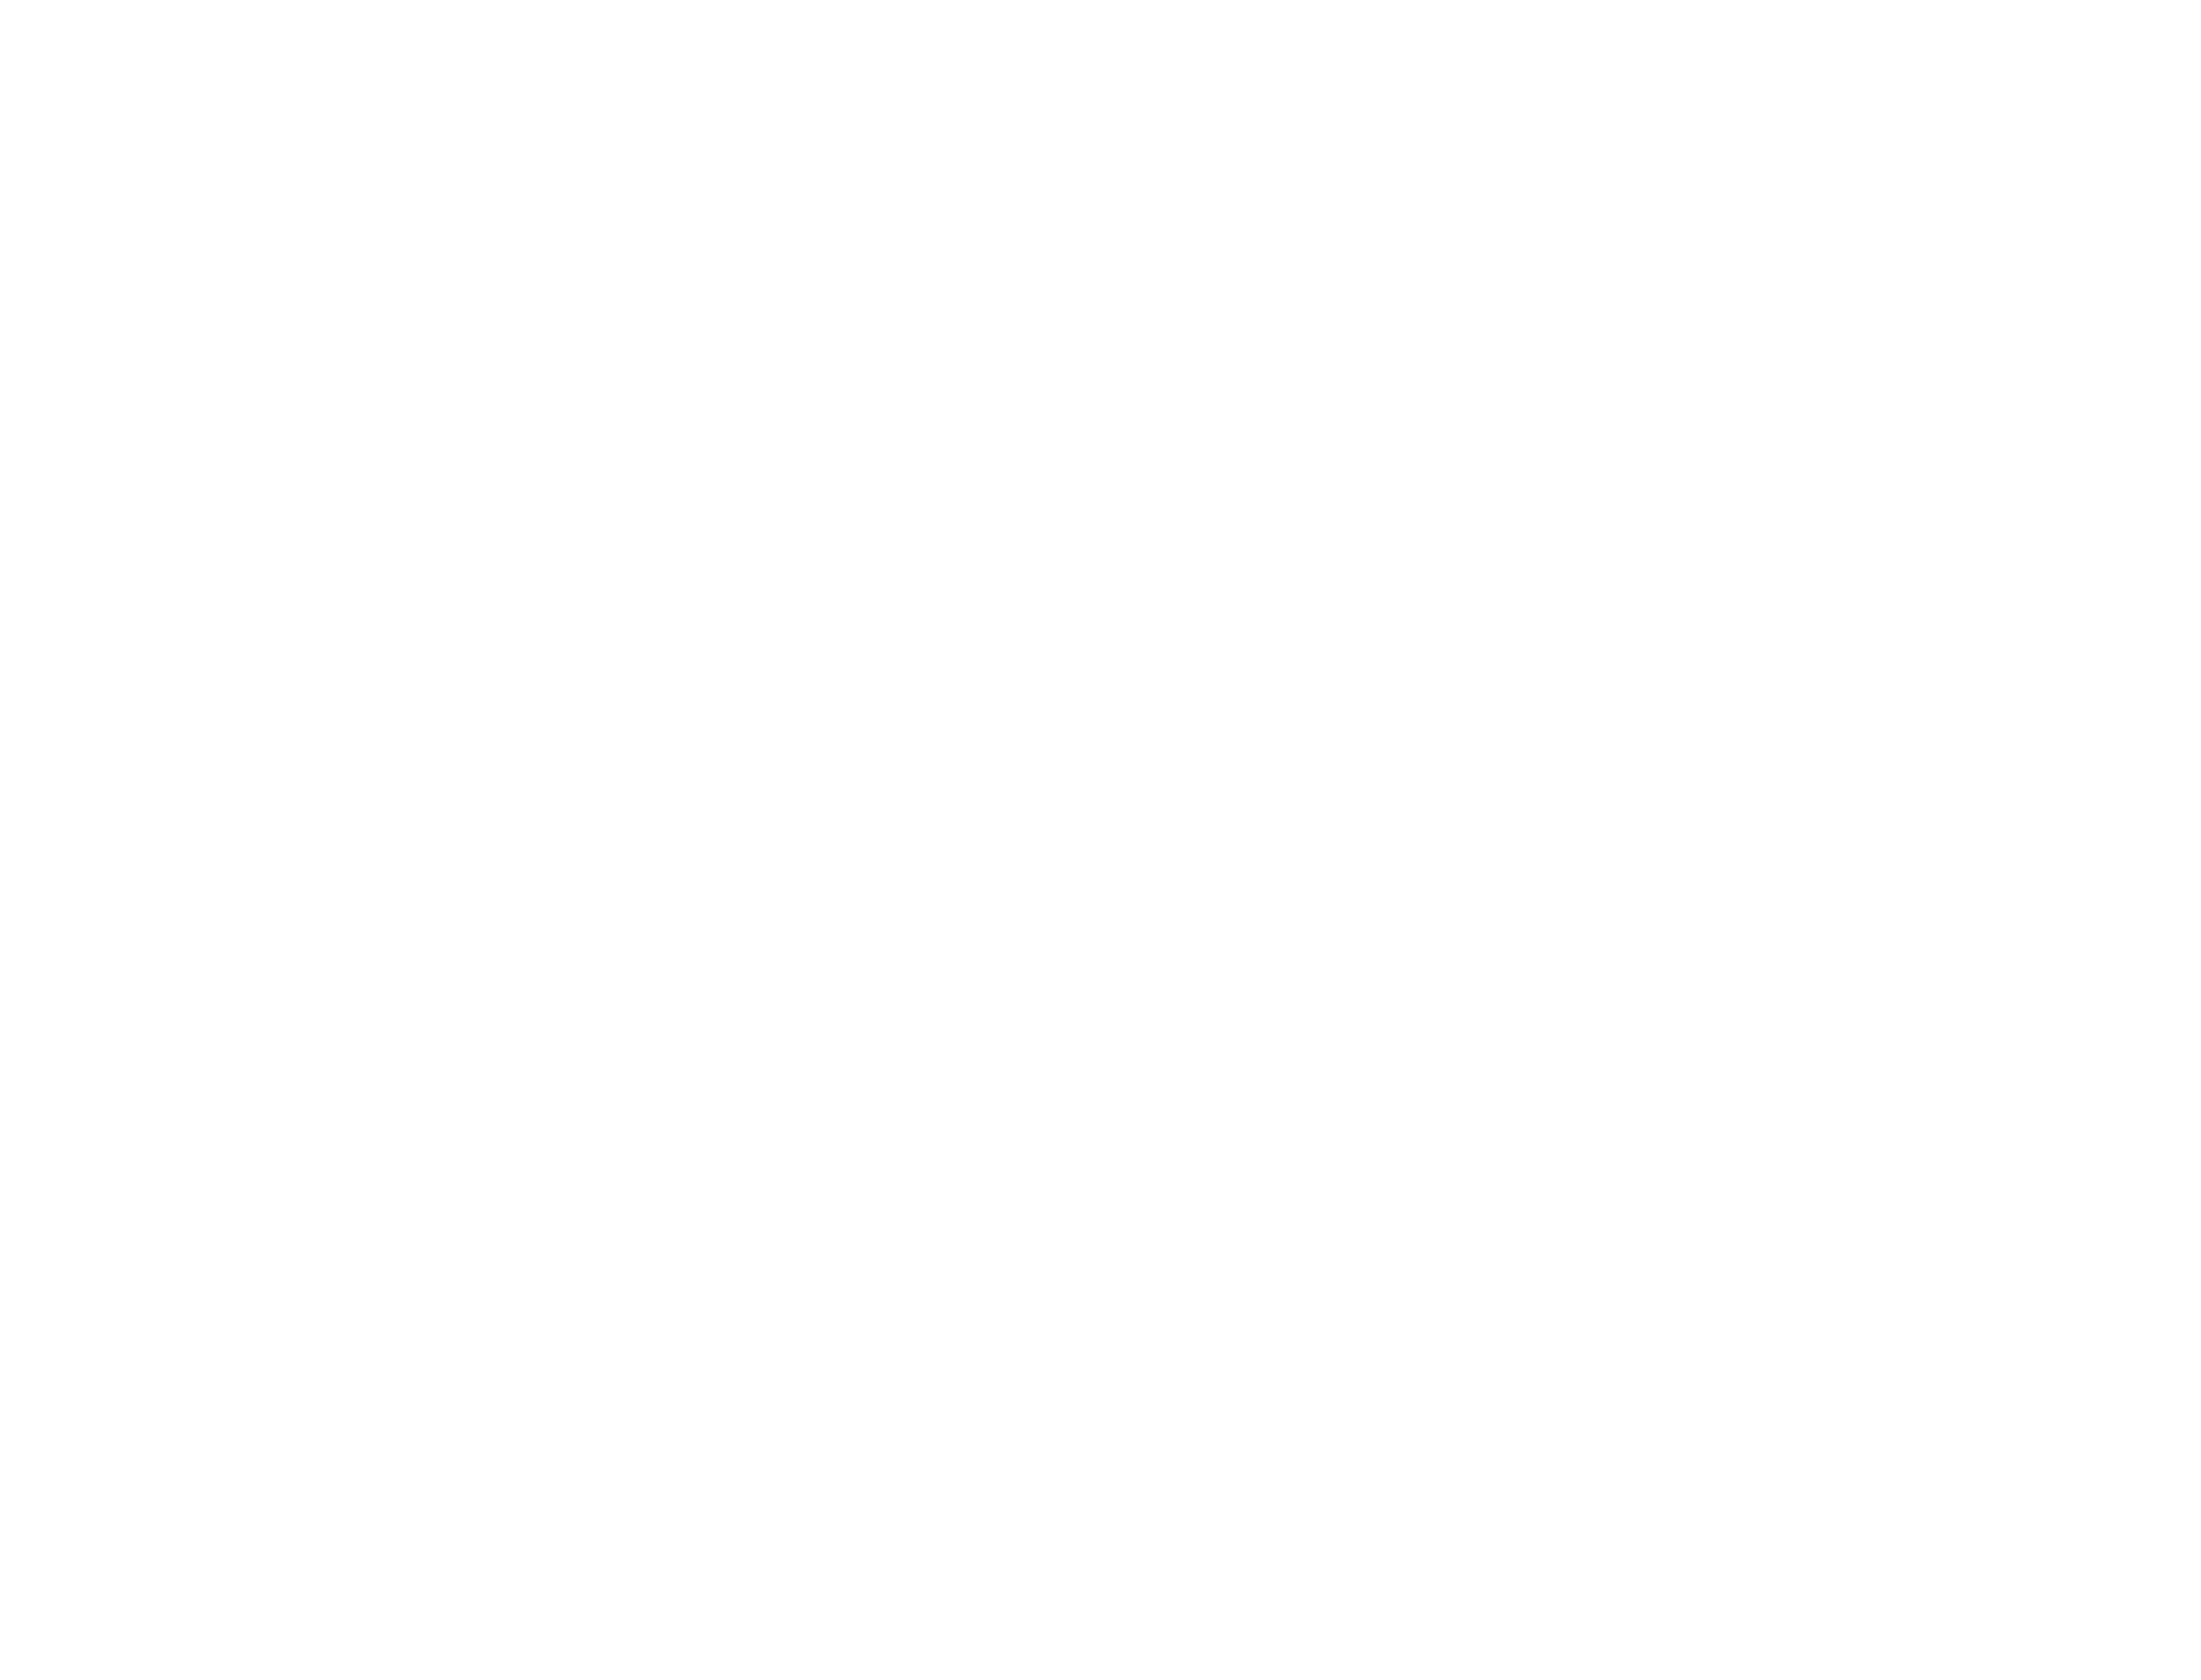 SkiBig3